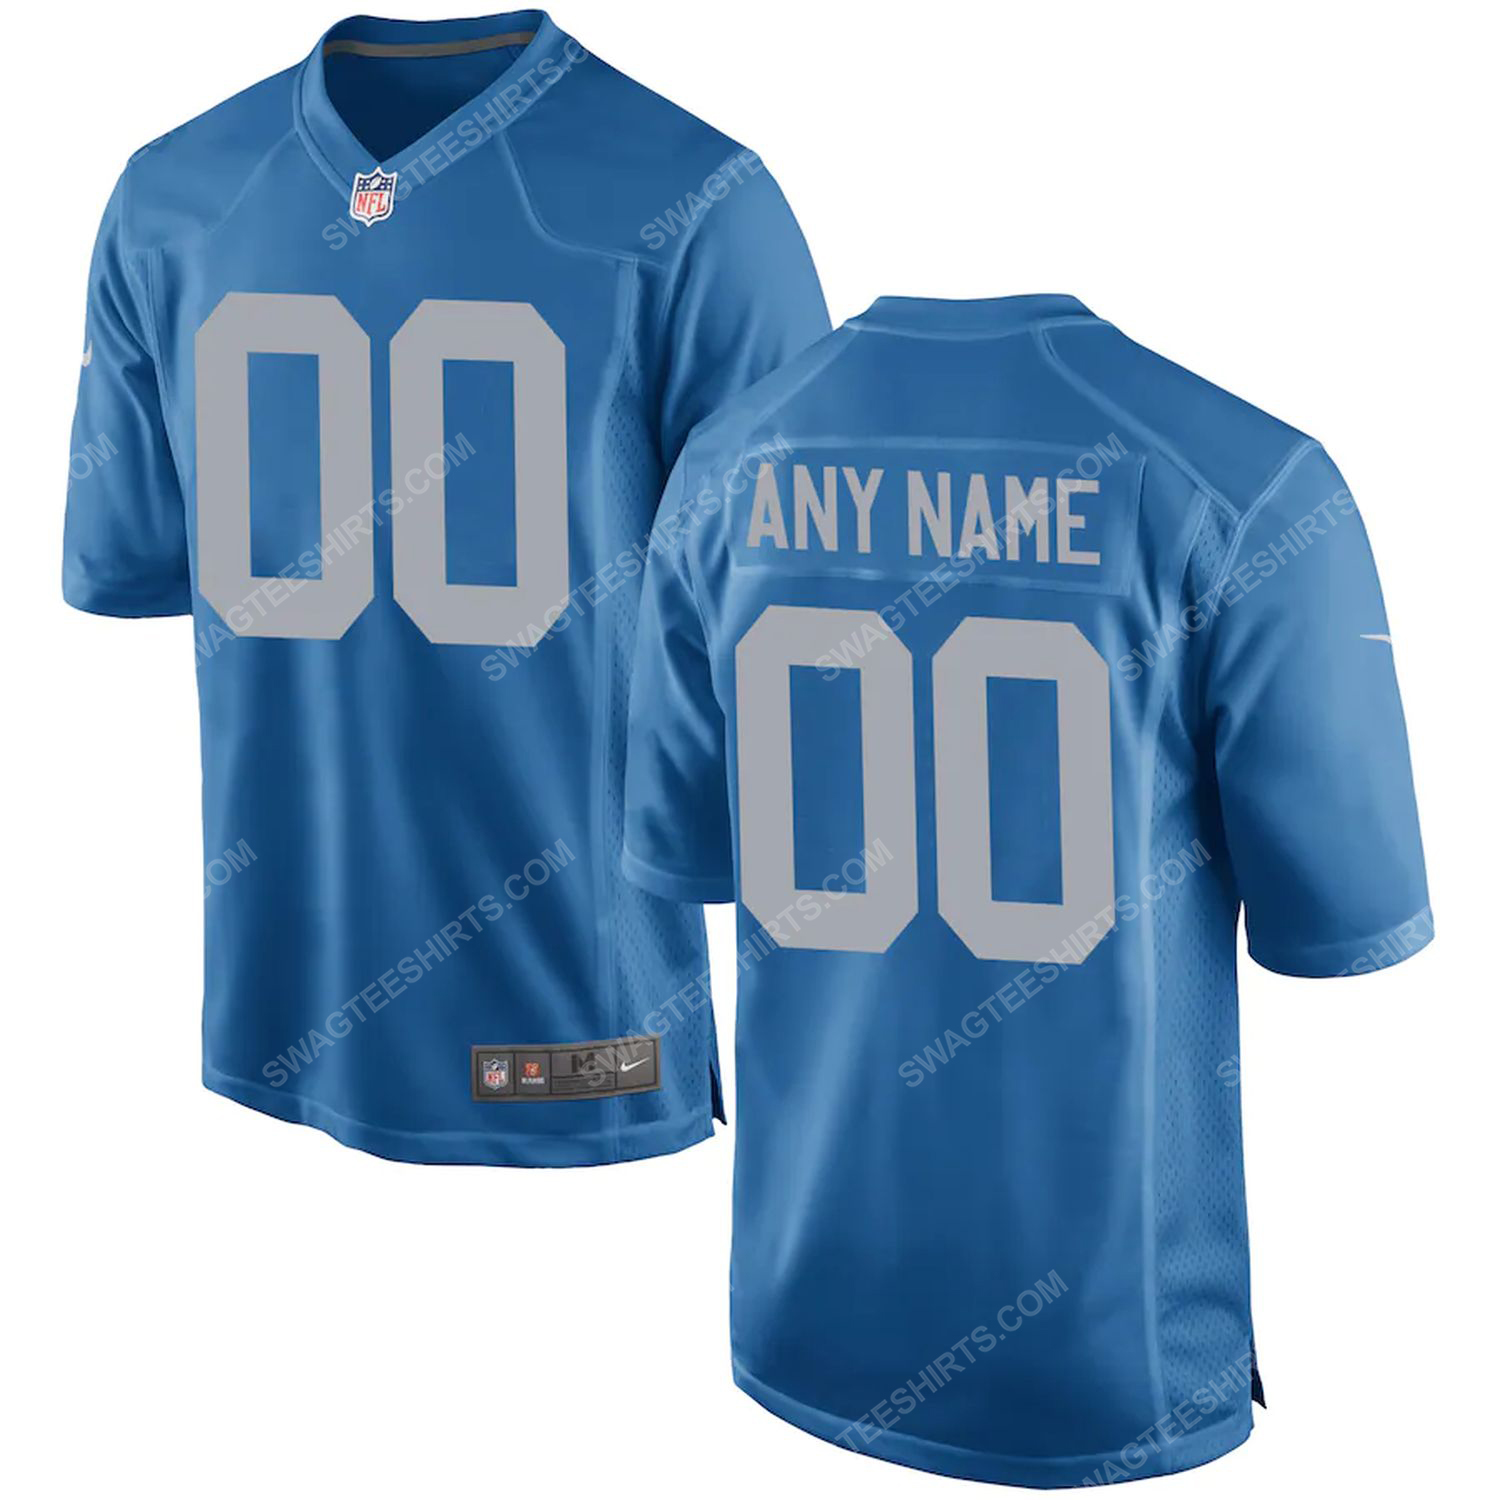 Custom nfl detroit lions team full print football jersey - blue